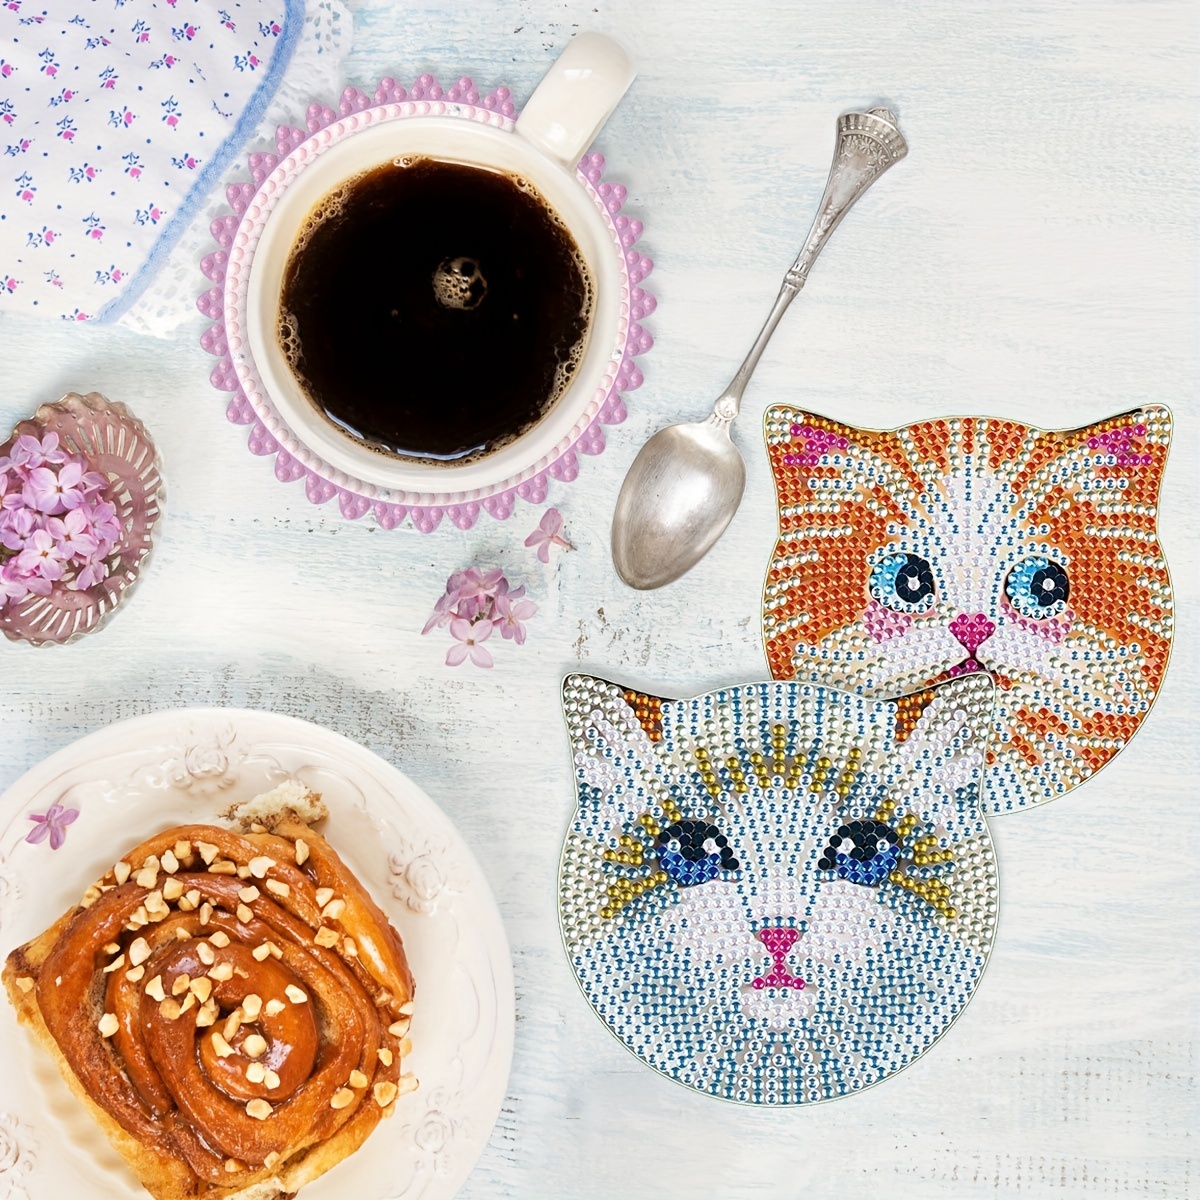 Cute Cat-DIY Diamond Painting Coaster Kit, Mosaic Making Wooden